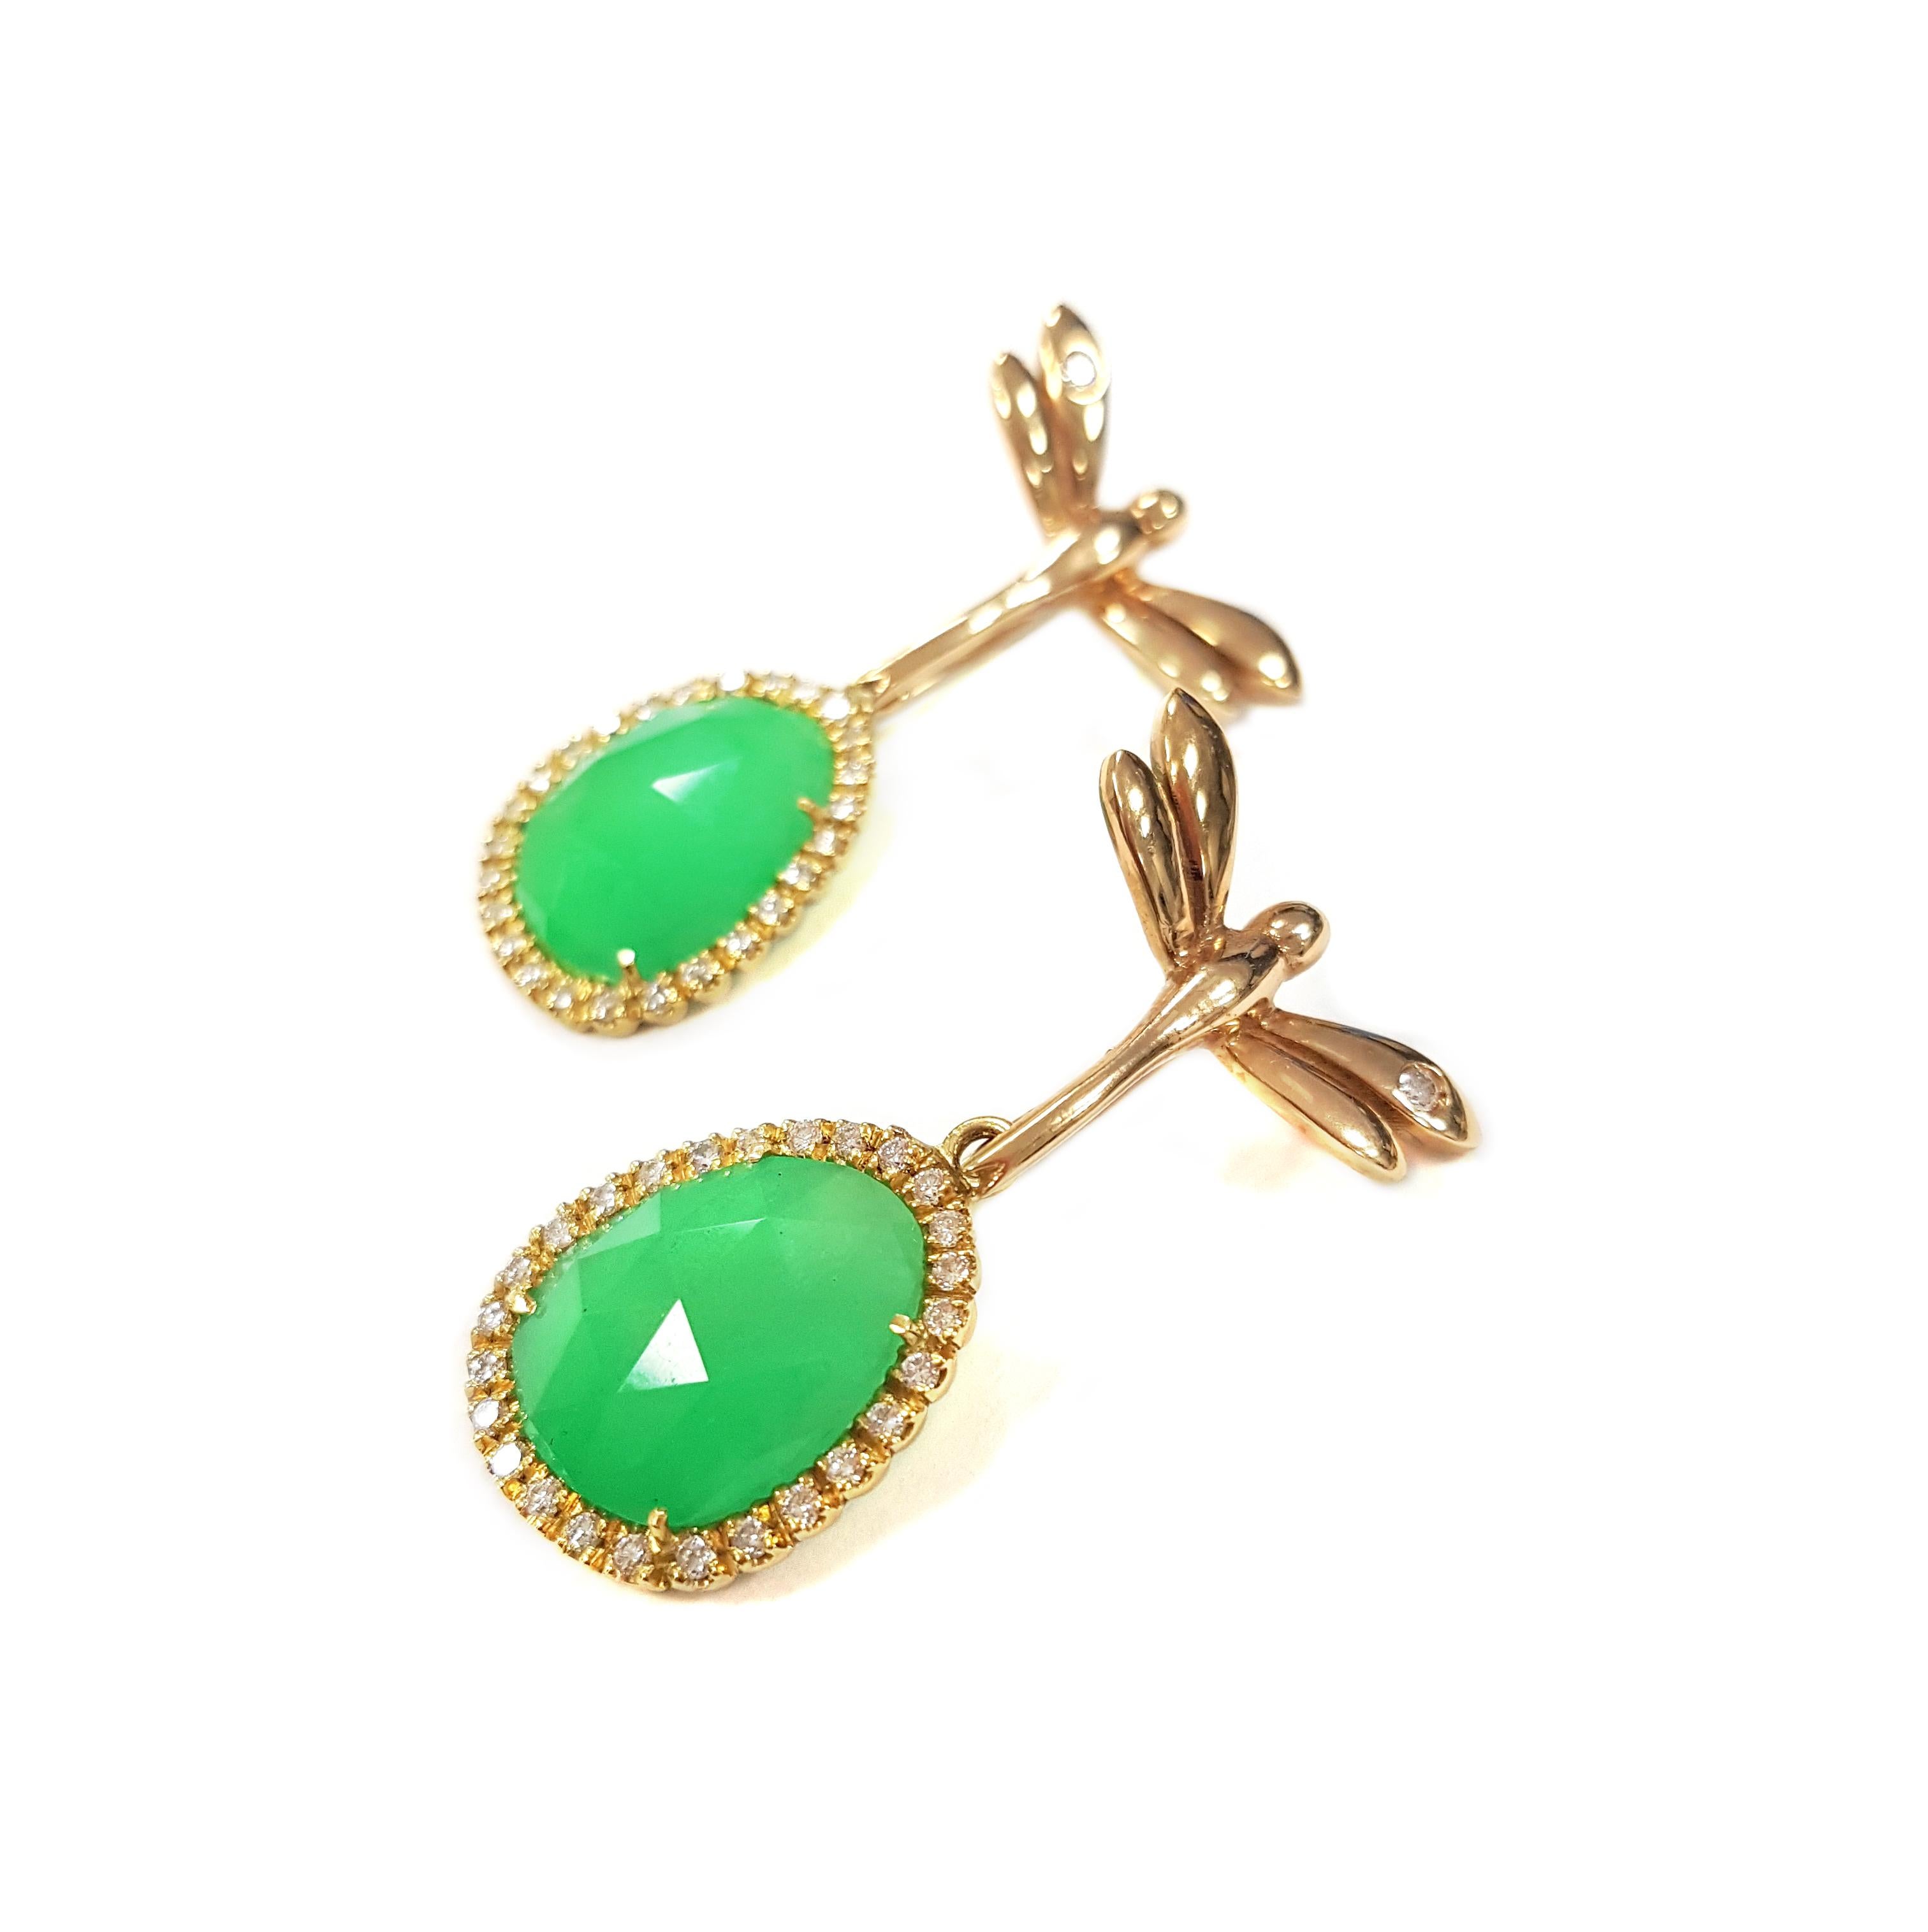 Contemporain Boucles d'oreilles contemporaines en or 18 carats convertibles en jade brillant avec libellule en vente